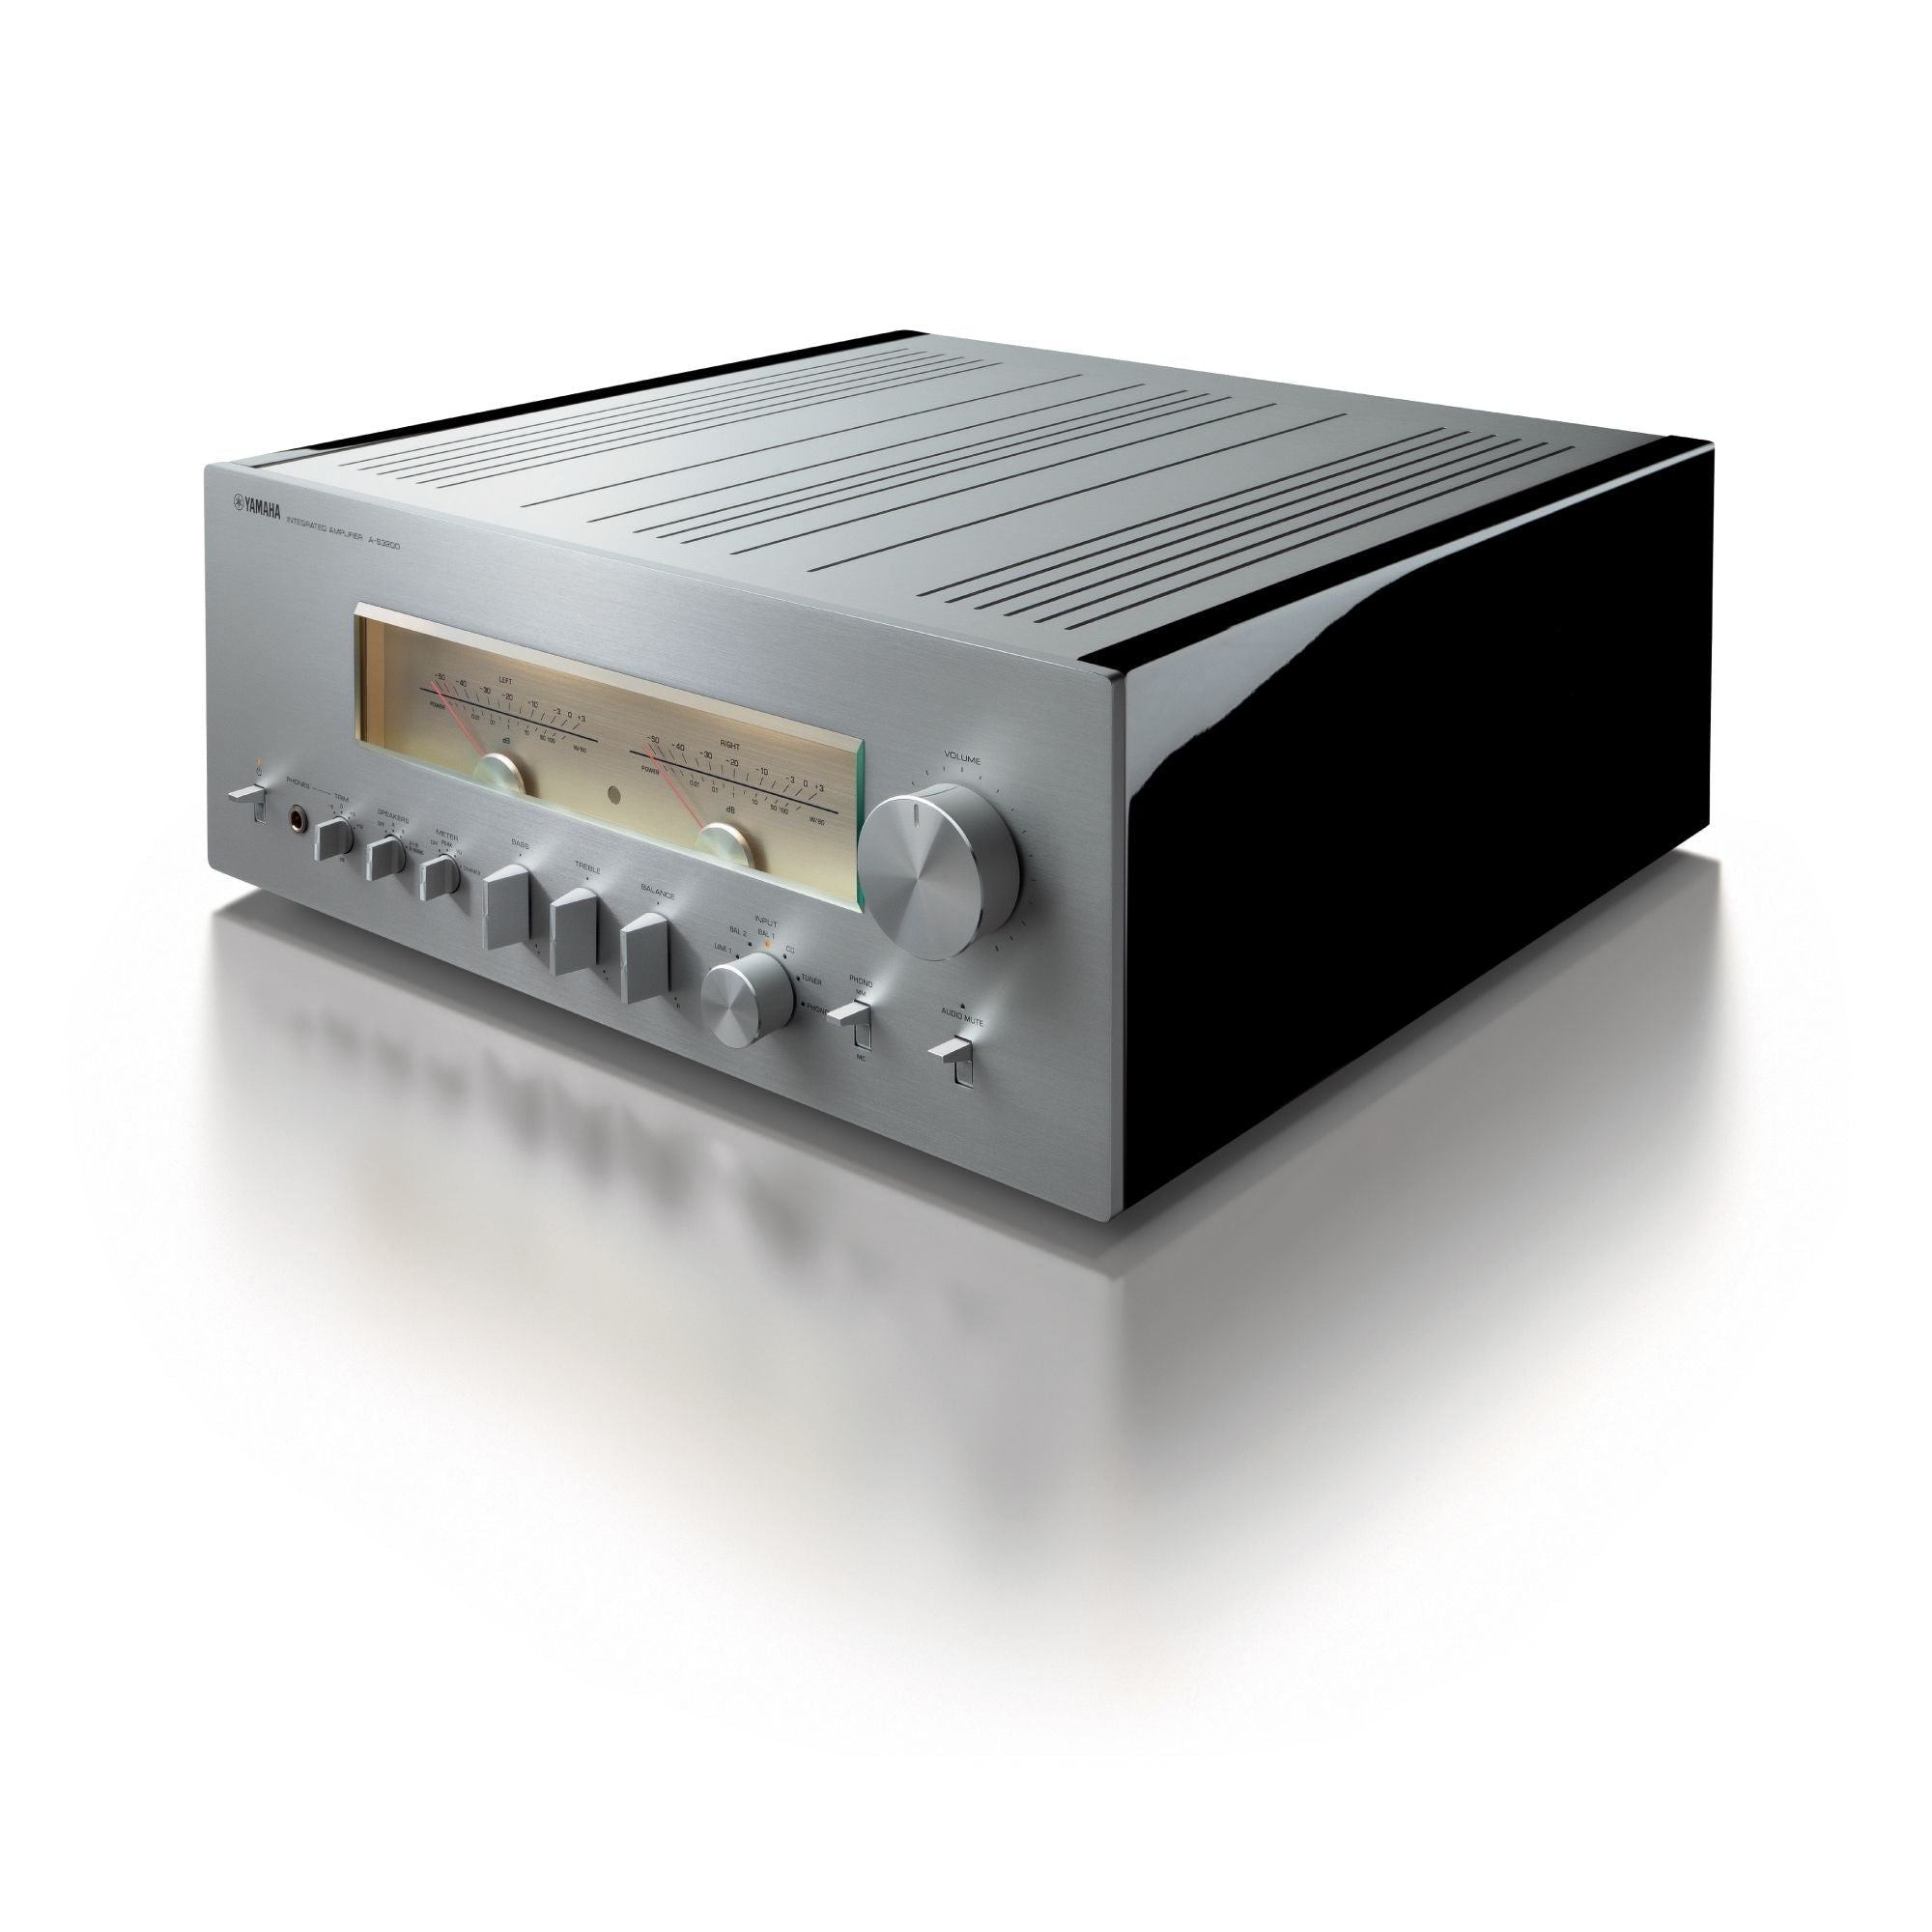 Yamaha - AS3200 - Integrated Amplifier Australia